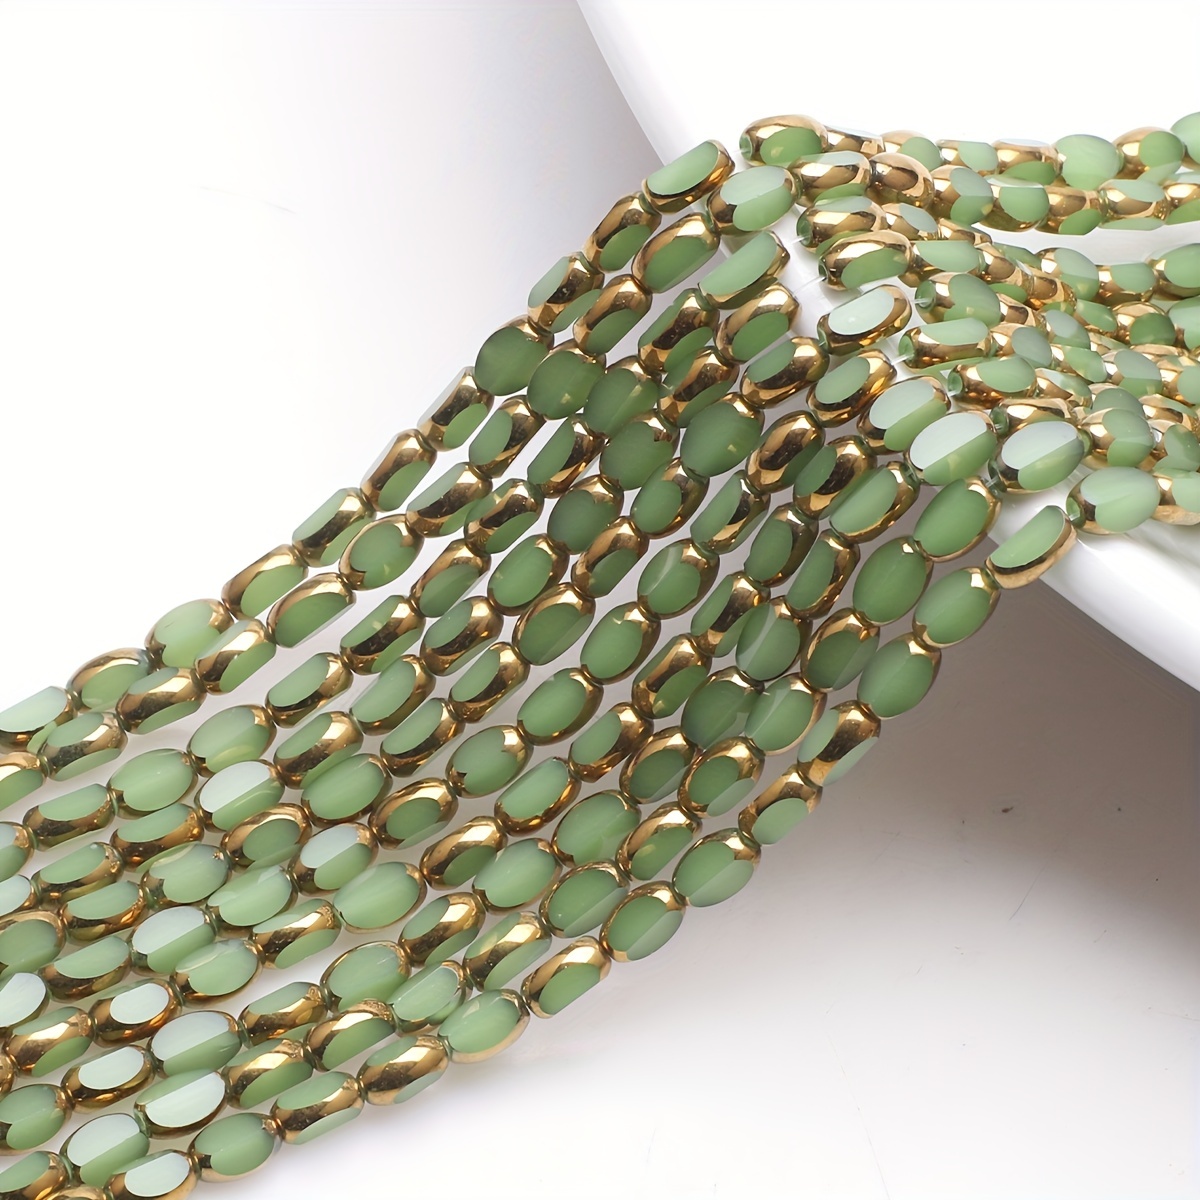 100pcs 8mm DIY Star-shaped Beads Star-shaped Glass Spacer Beads Colored  Star-shaped Beads For Handmade Jewelry Bracelet Necklace Making